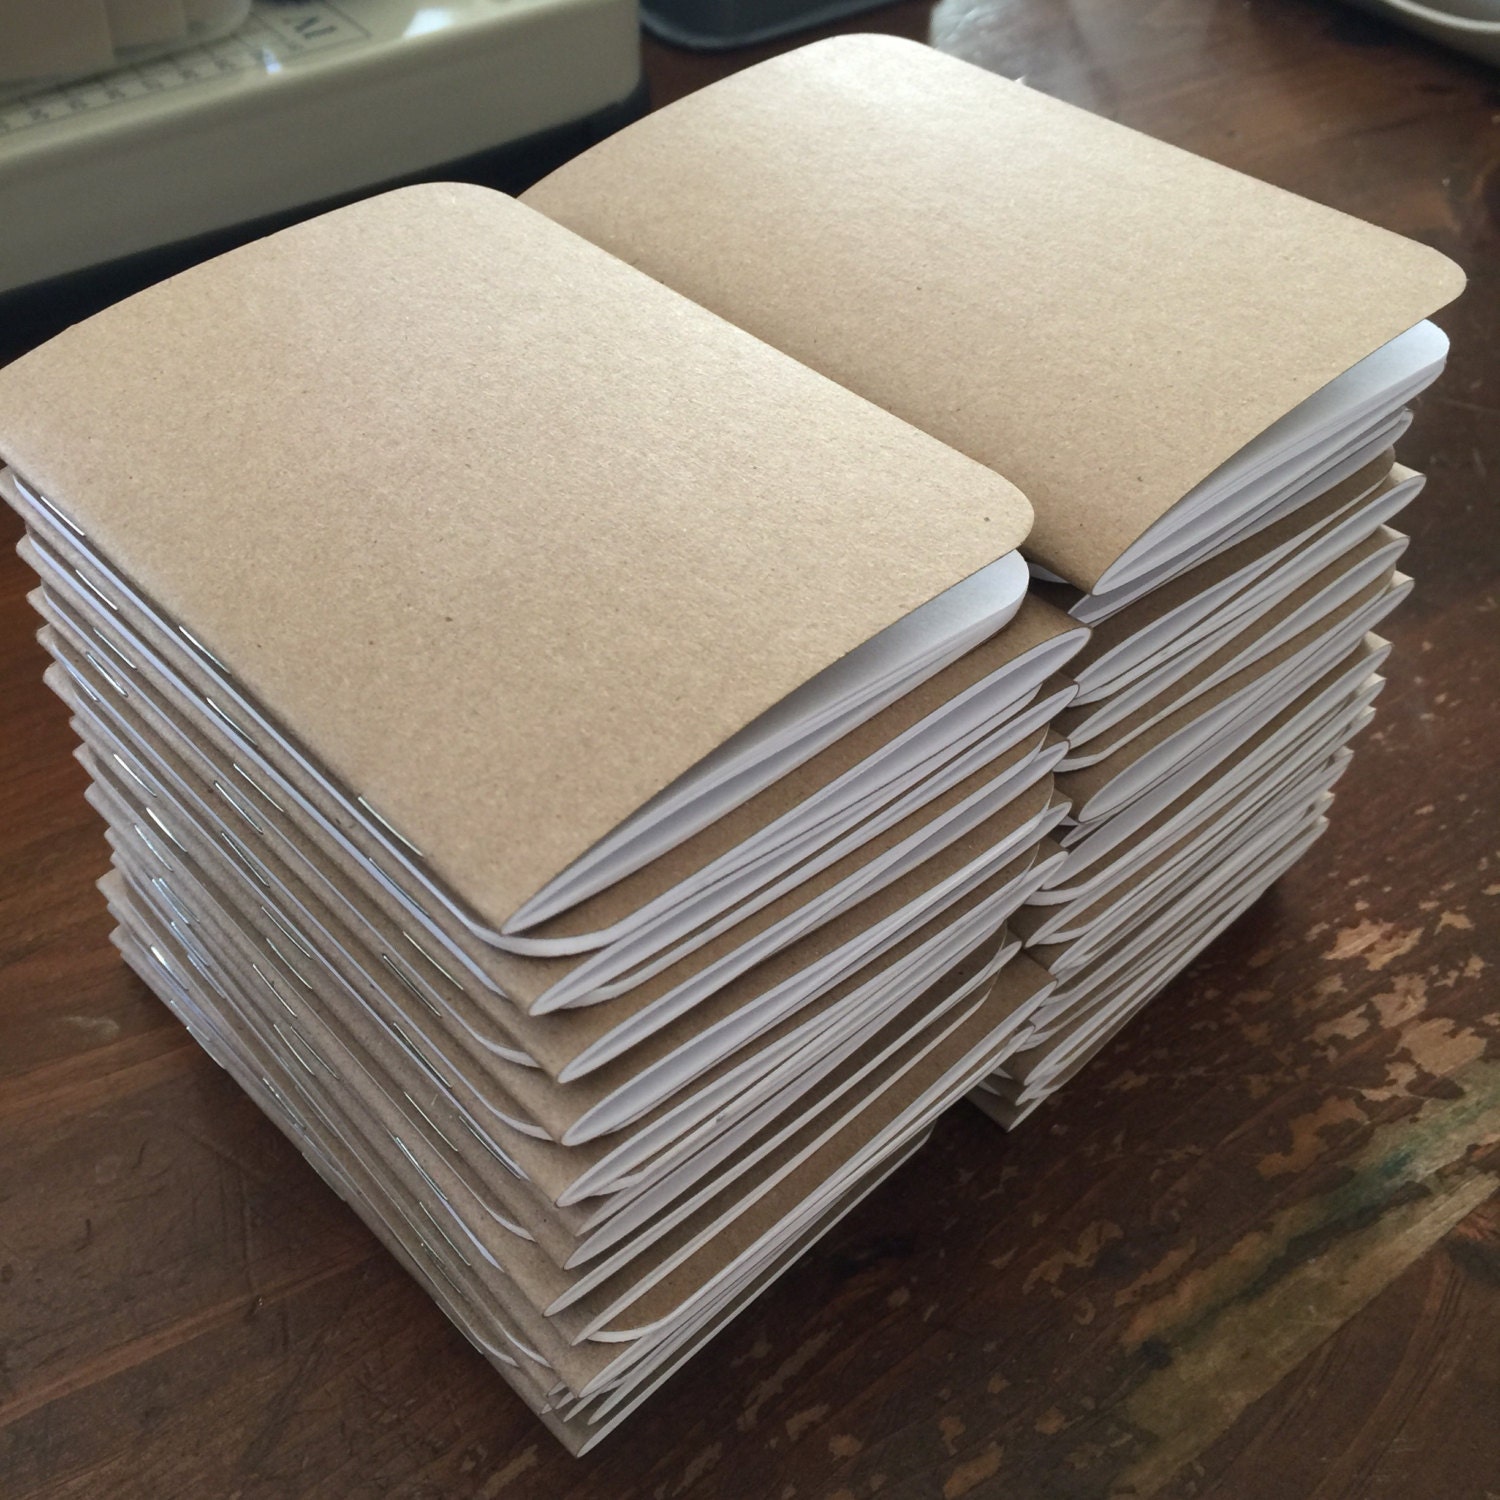 wholesale notebooks